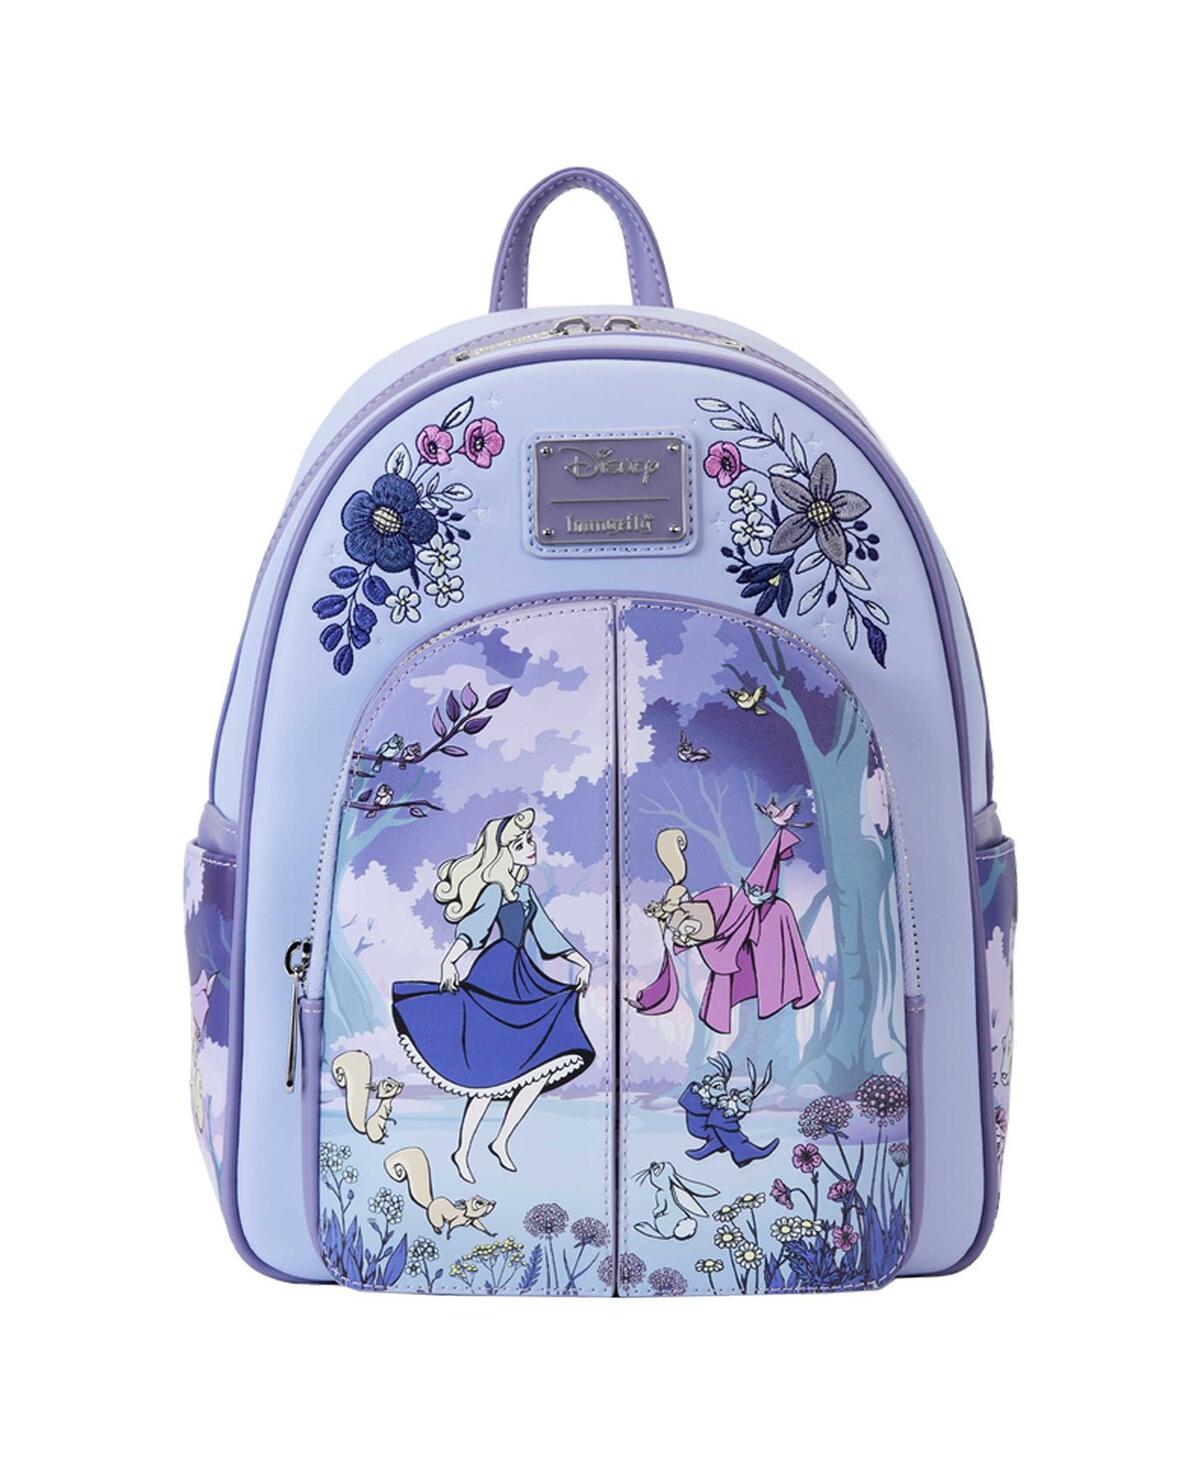 Sleeping Beauty 65th Anniversary Mini Backpack